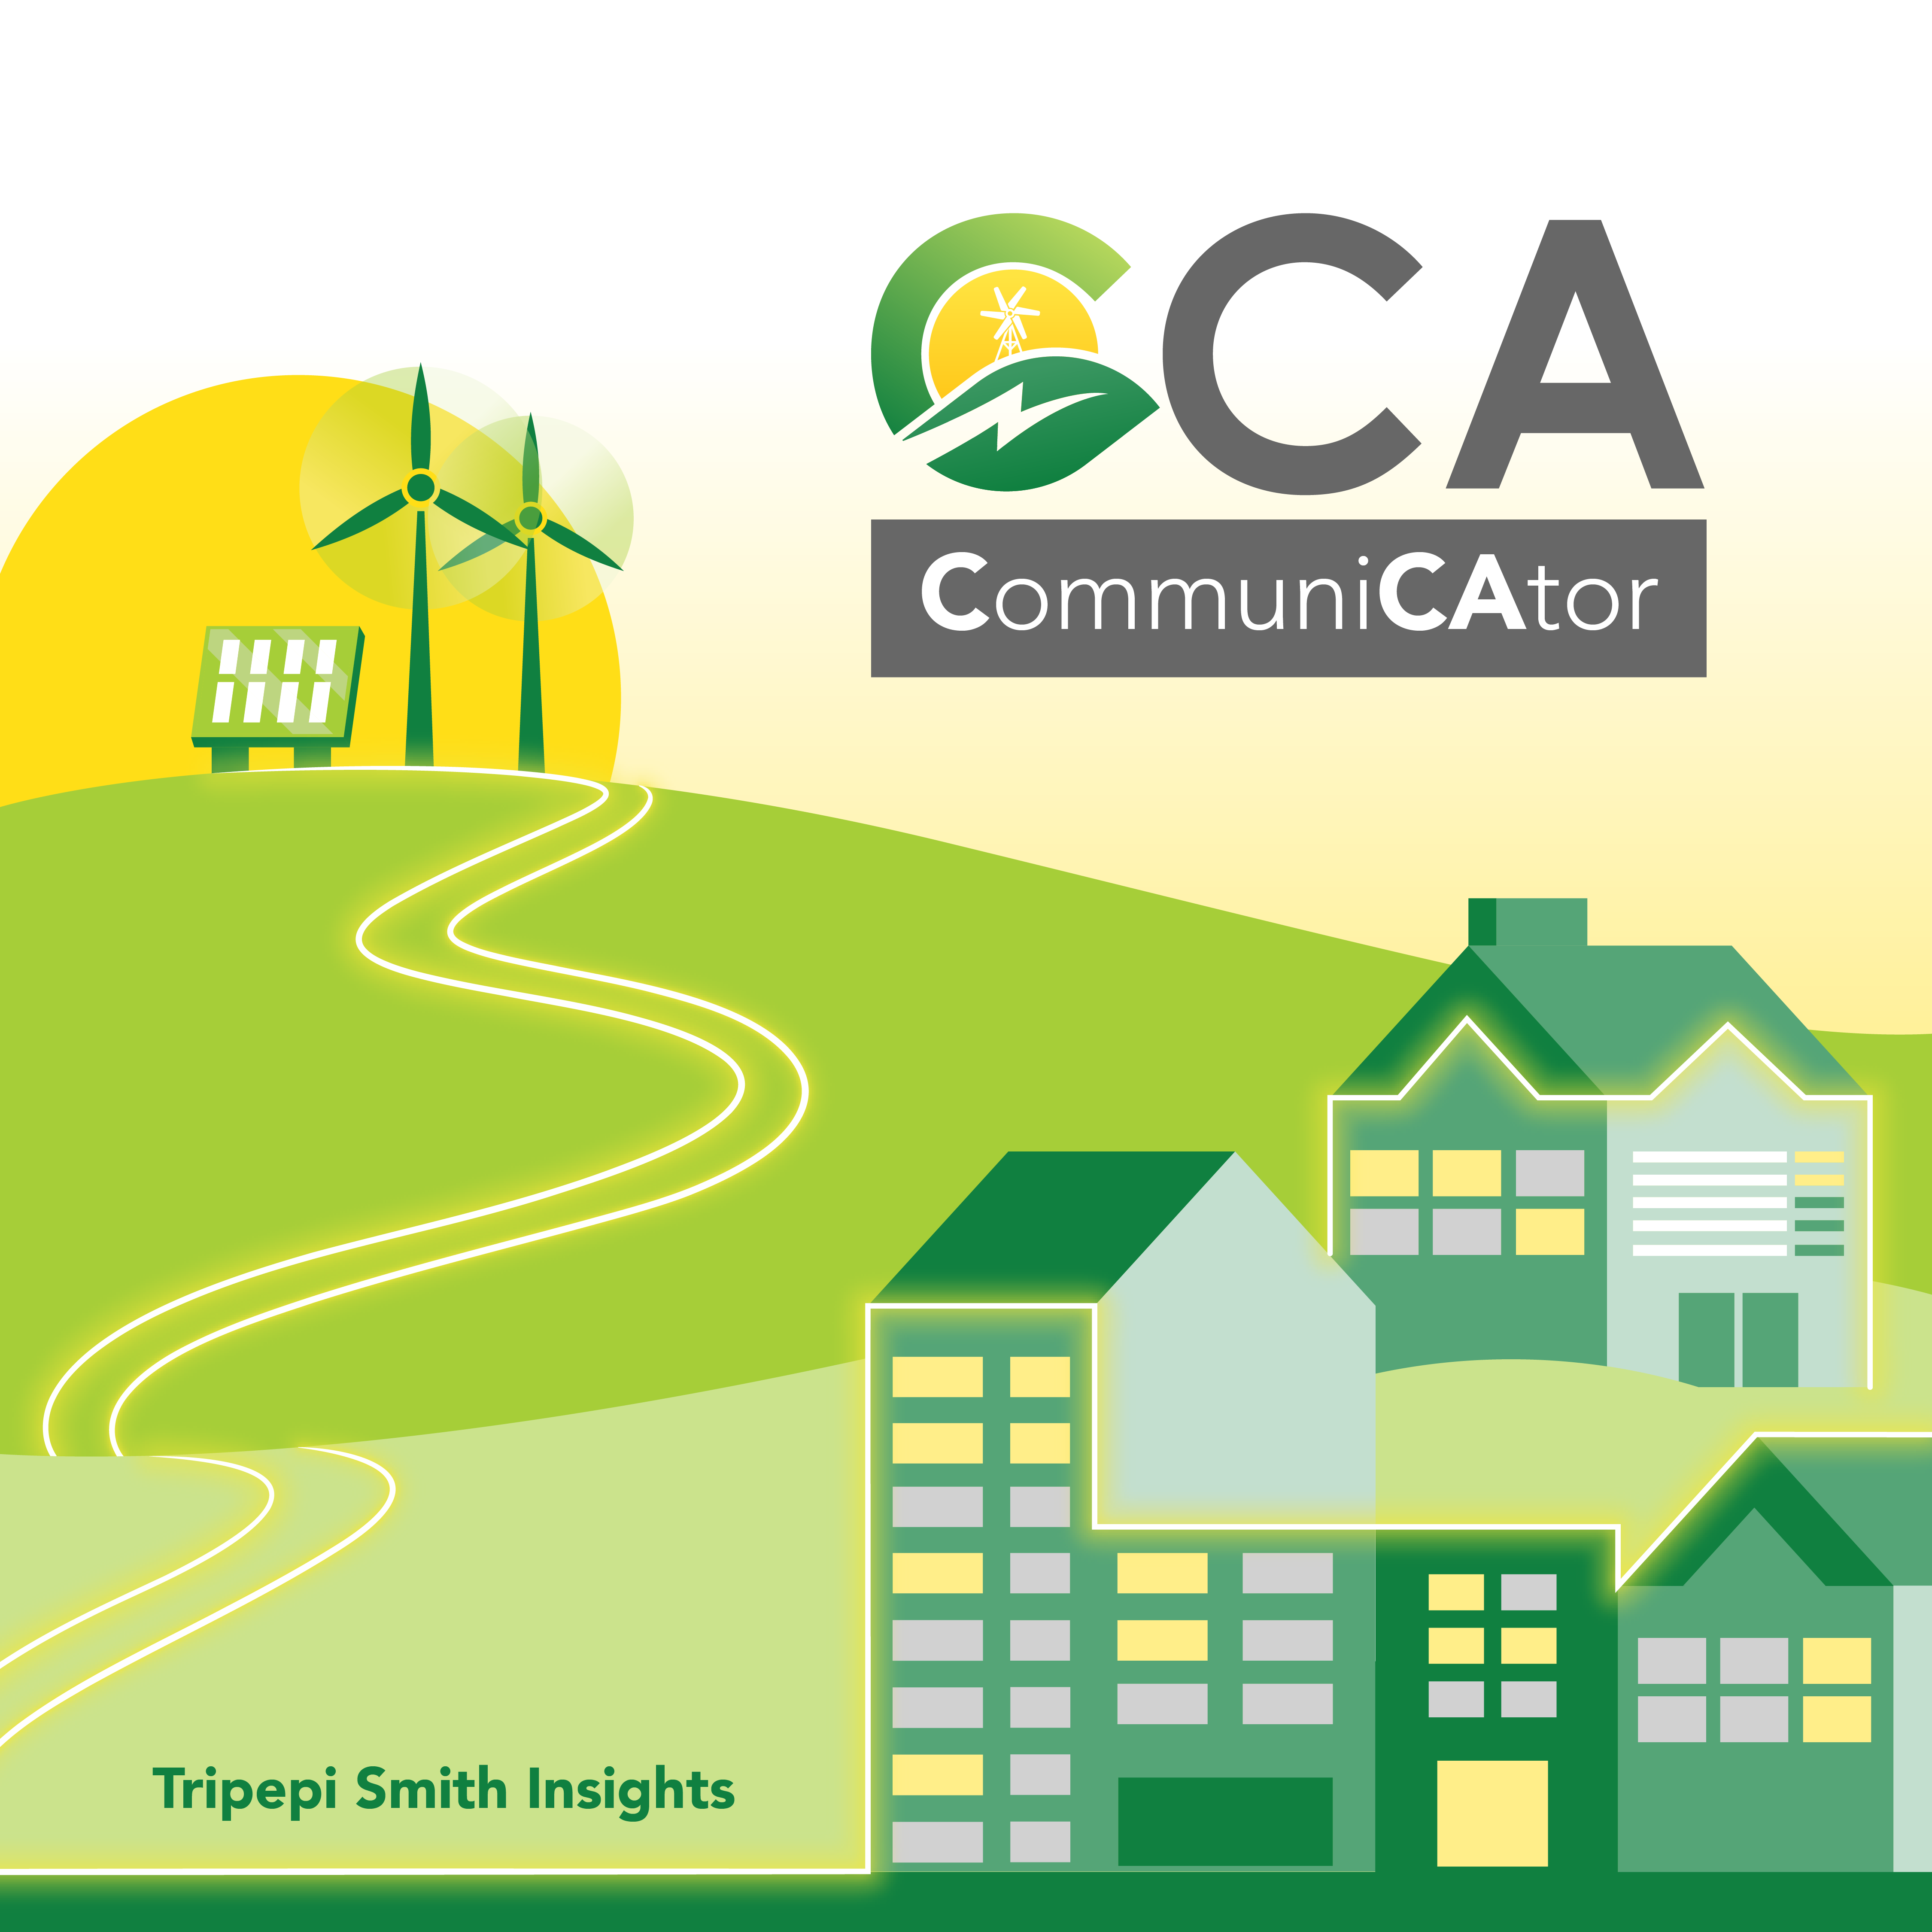 CCA Communicator Logo